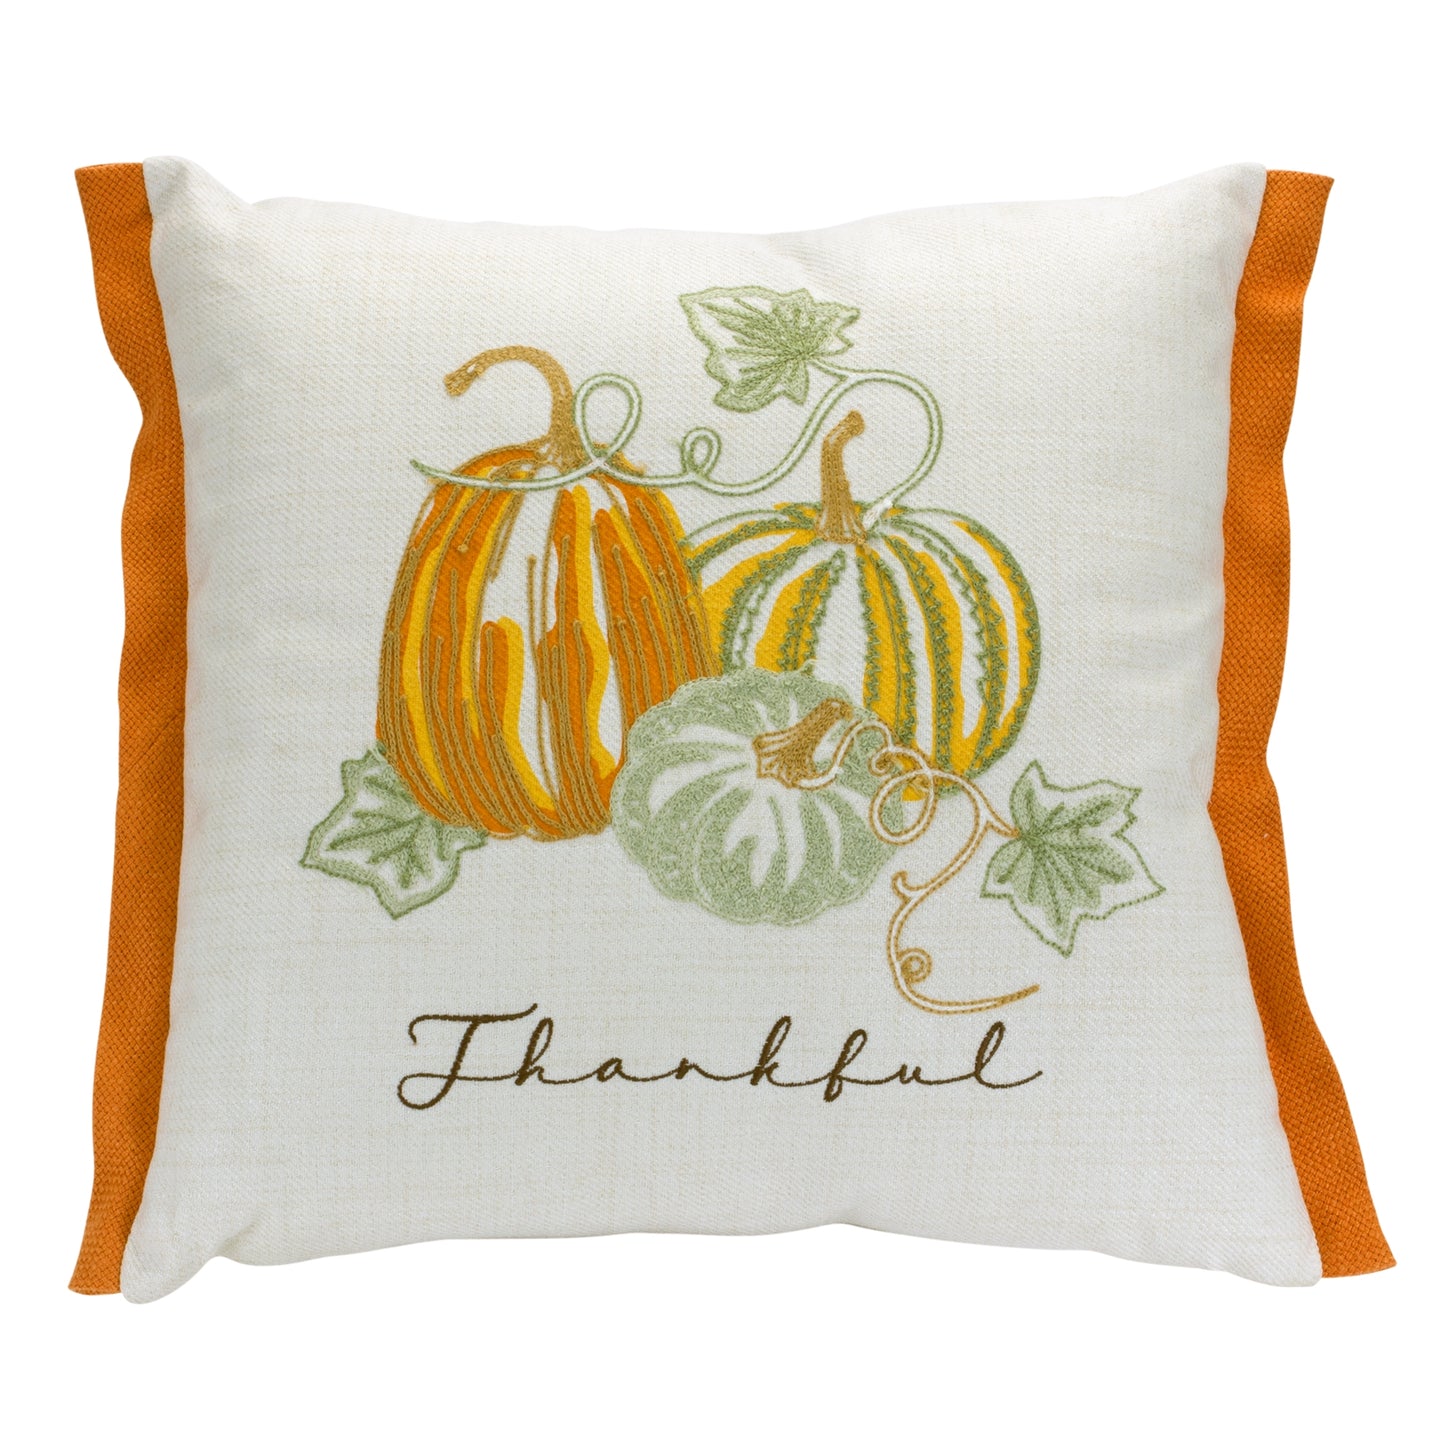 Thankful and Pumpkin Pillow 16"SQ